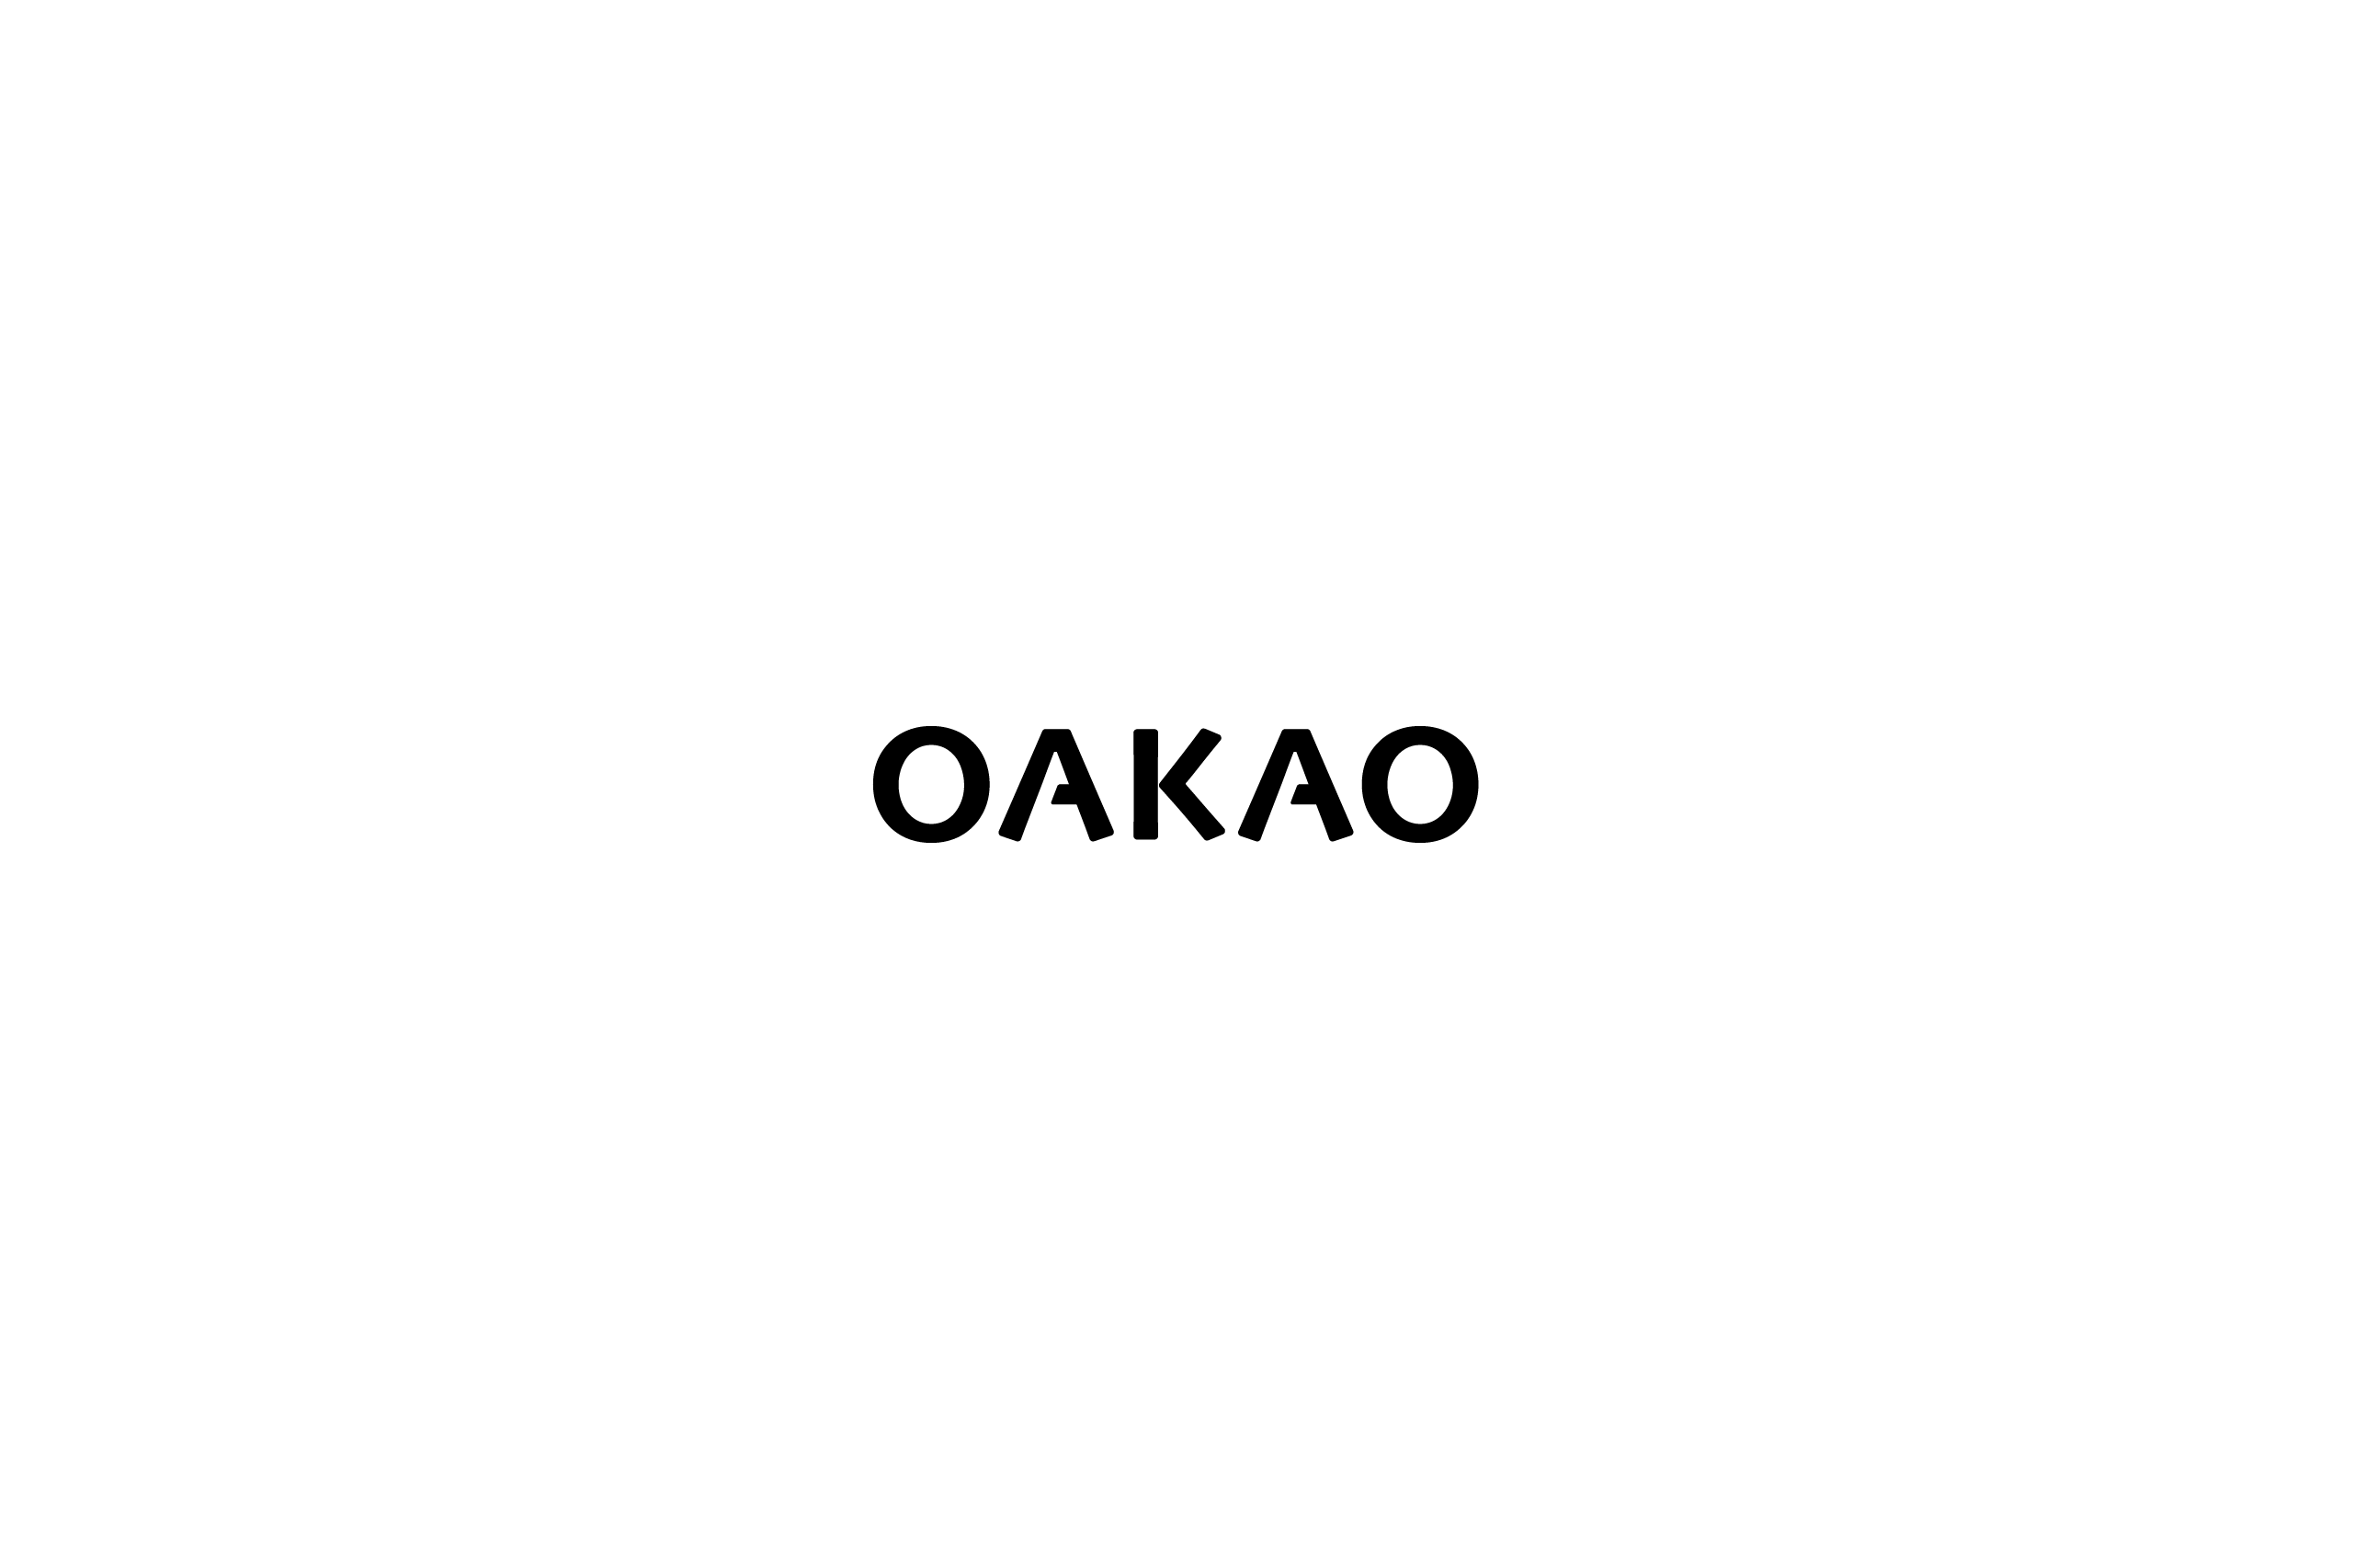 Daily logo challenge, day 7, Oakao fashion brand wordmark by Xavier Wendling